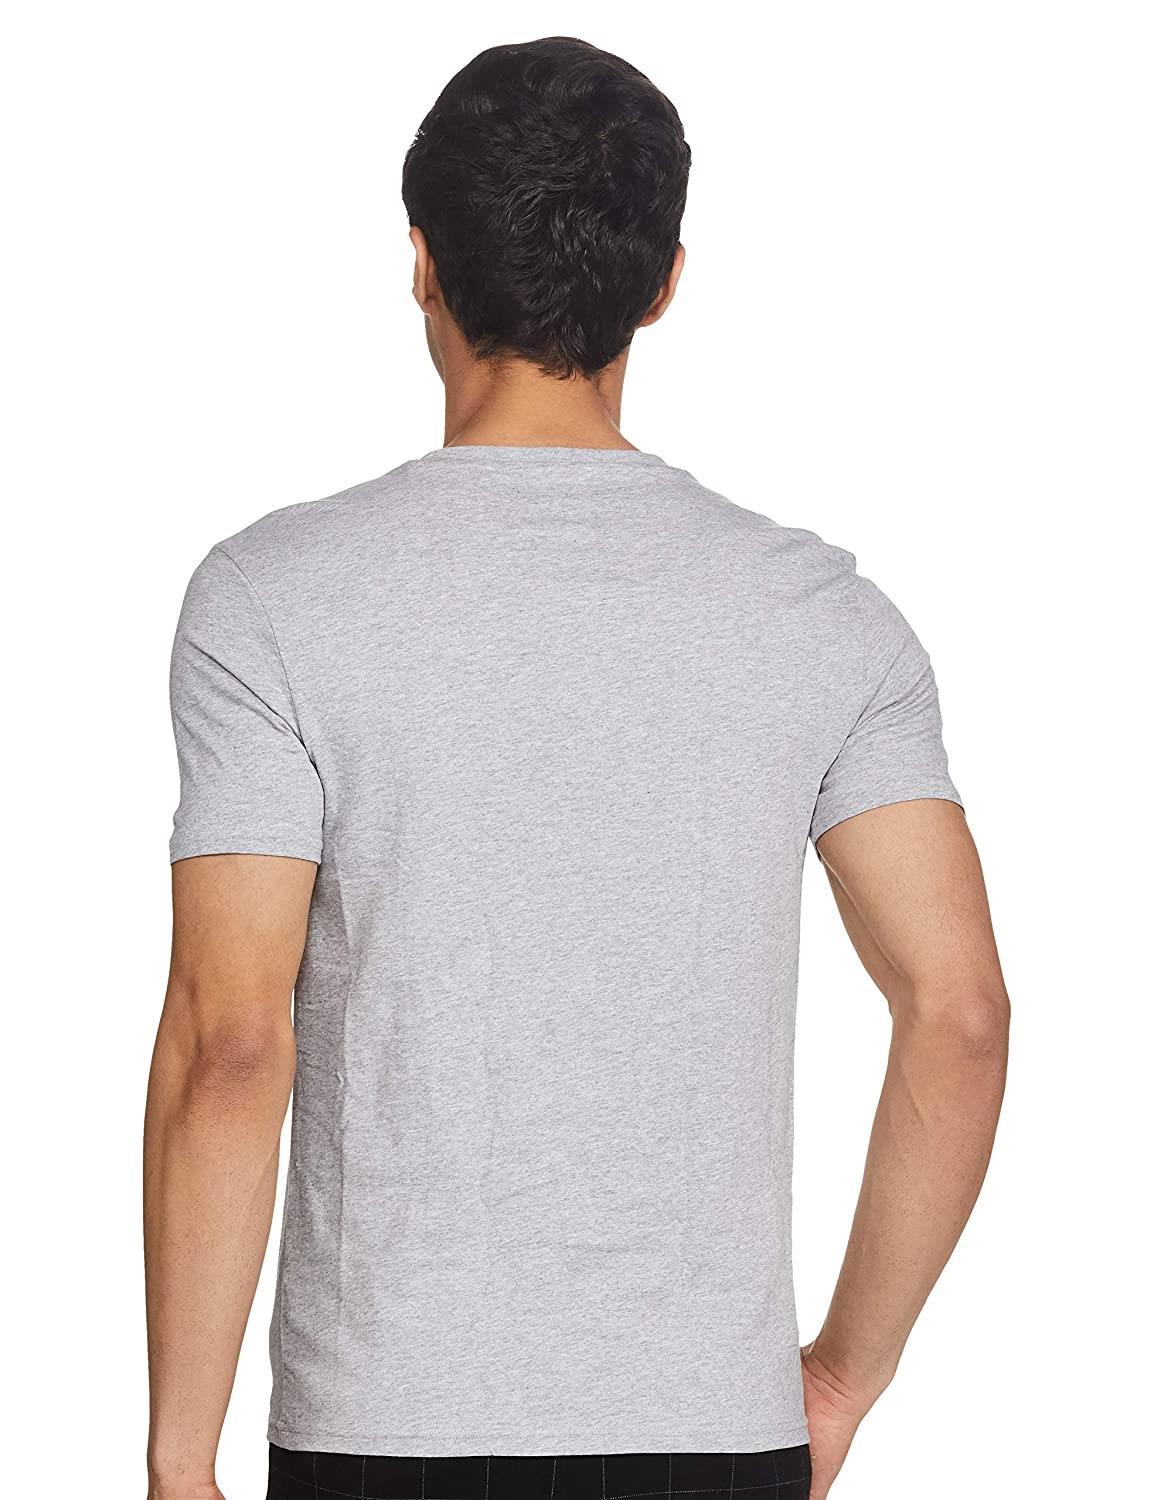 Levis Mens Plain Regular Fit T-Shirt